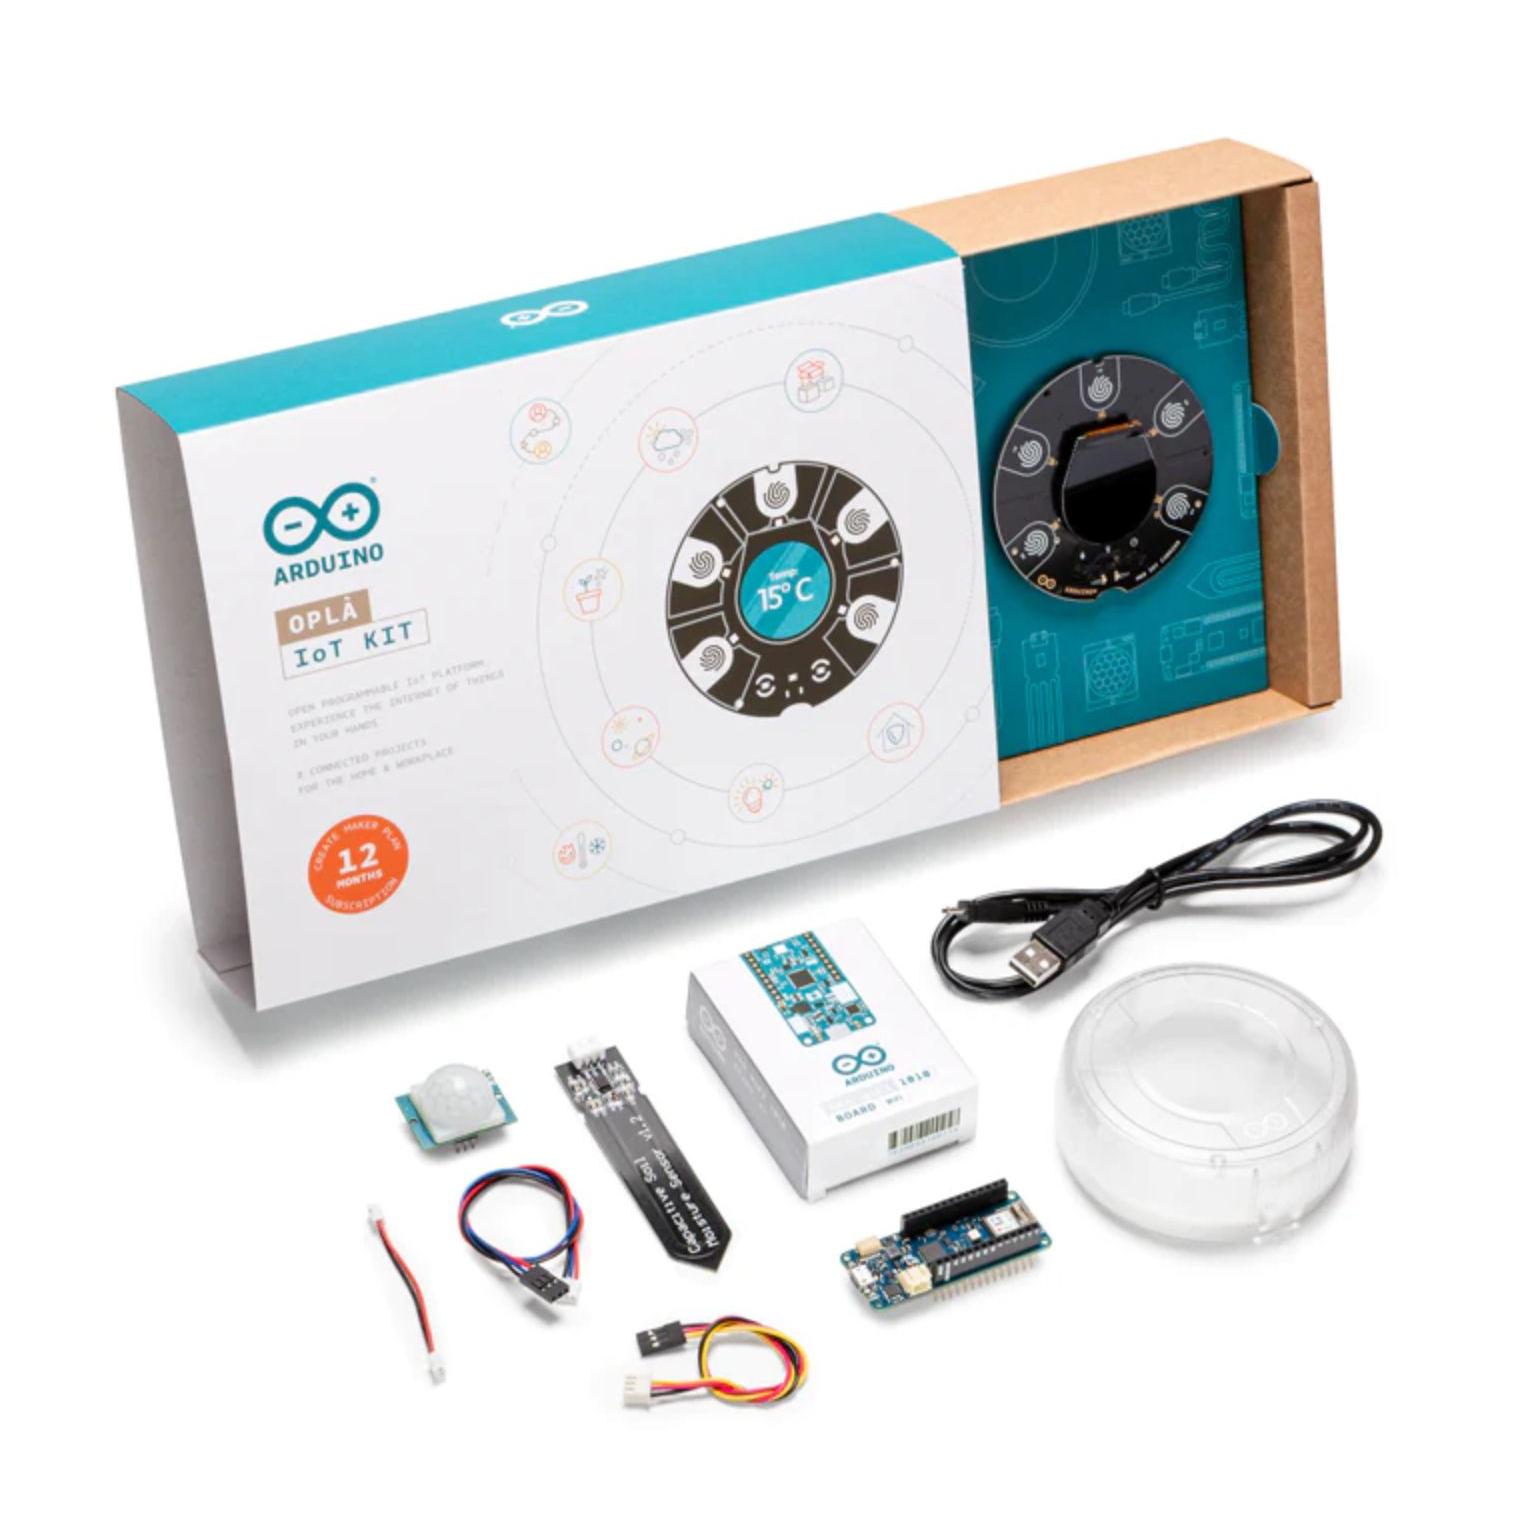 Arduino Arduino Oplà IoT Kit